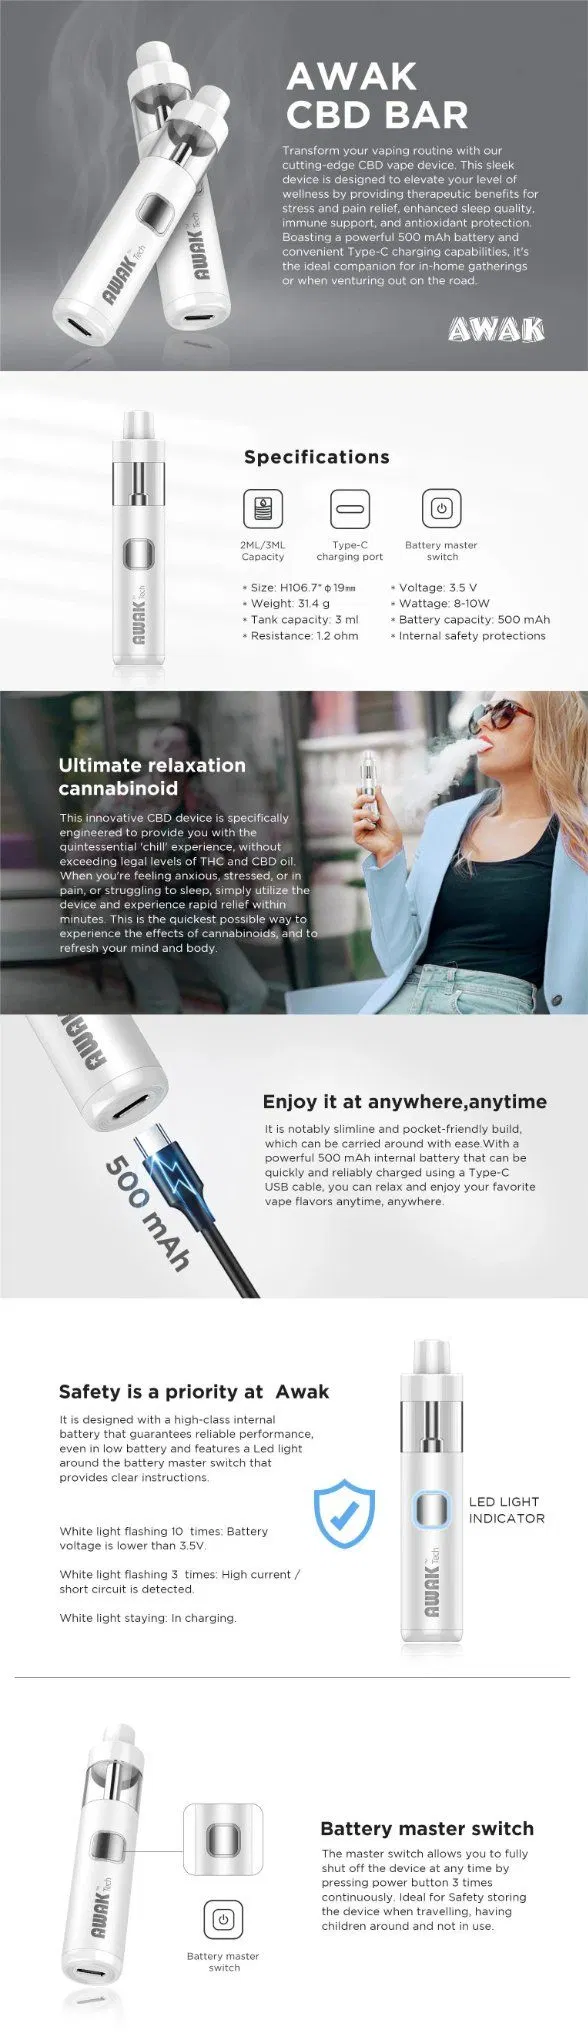 Komodo Awak Bar 3ml Disposable Vape Pod Pen Rechargeable Thick Oil Vaporizer Pen 500mAh Battery 3ml Pod Cartridge